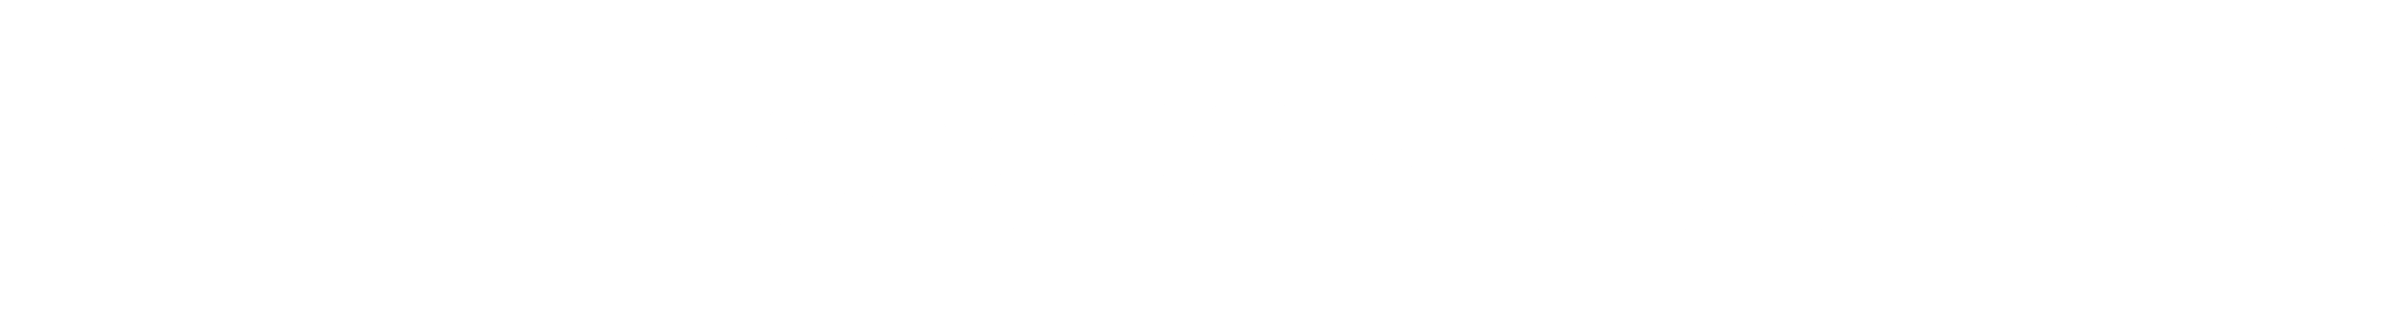 logo-thomson-reuters-white.png